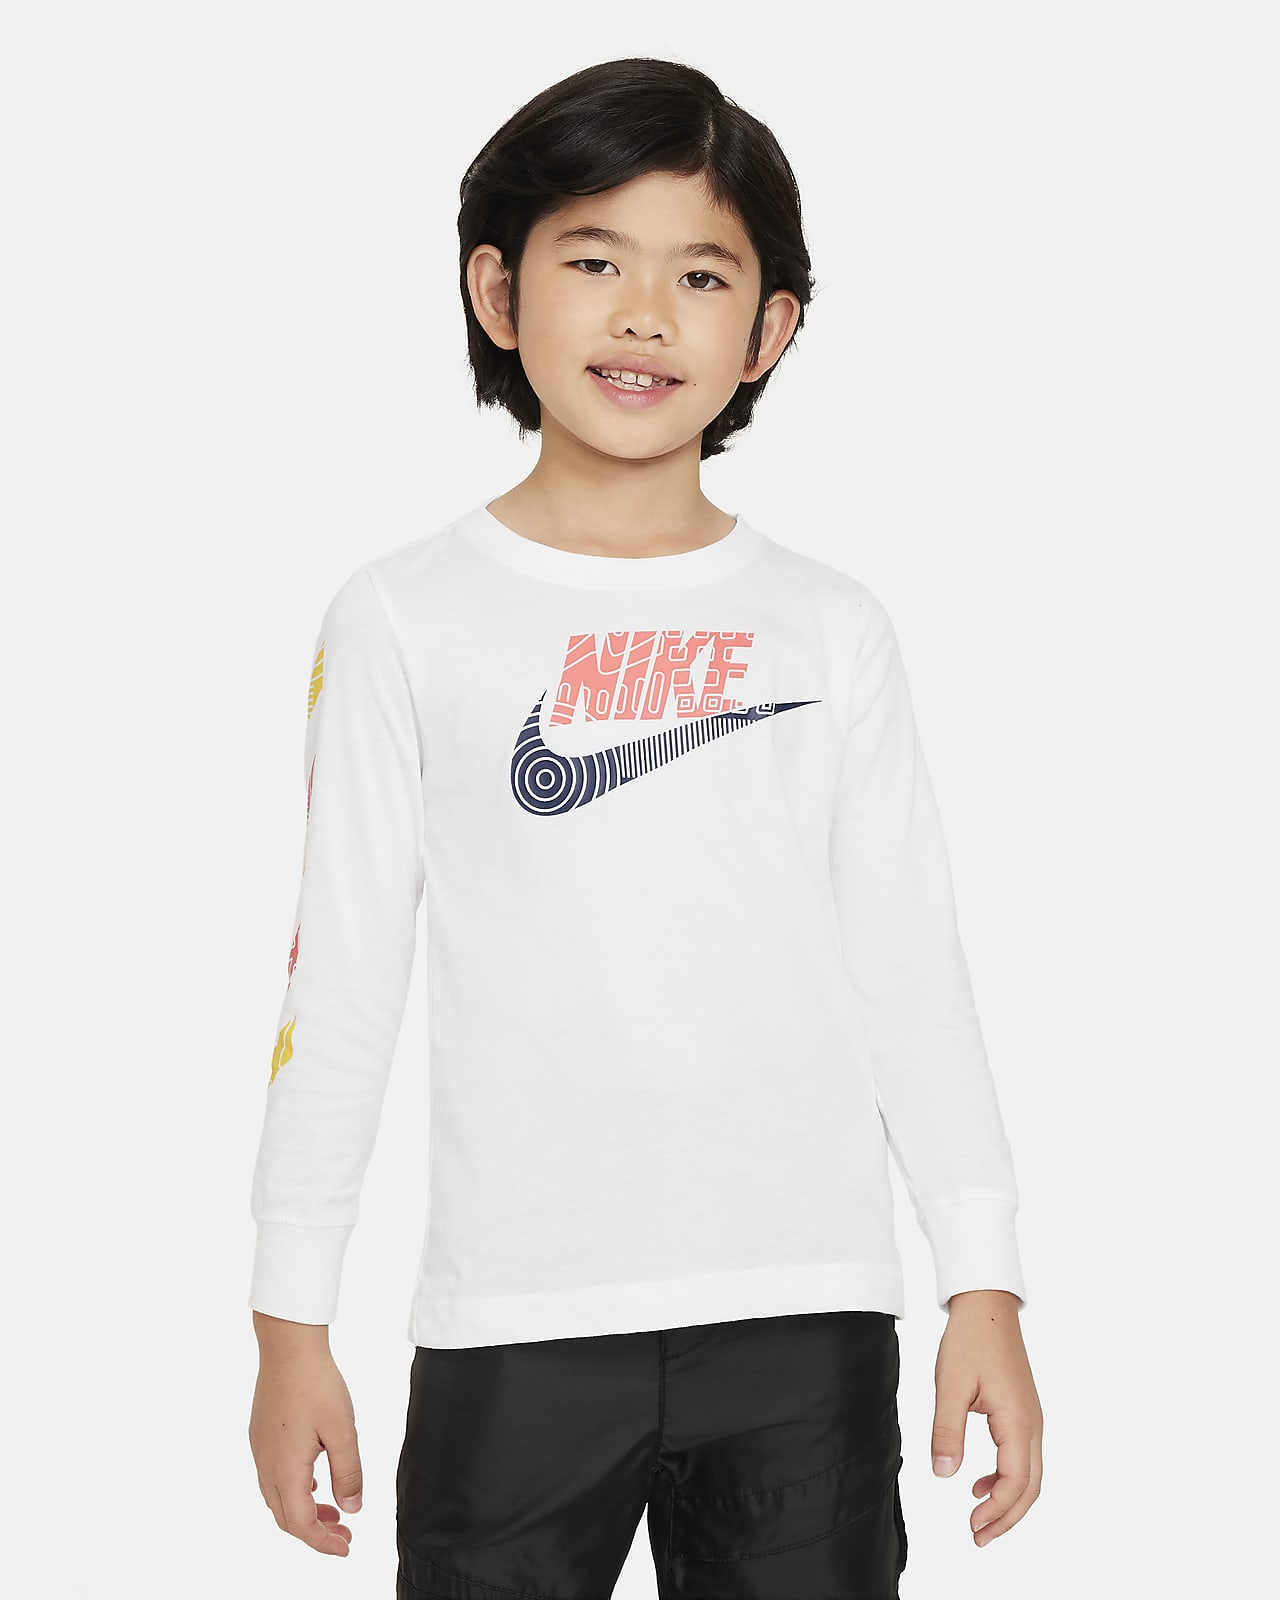 Nike Futura Long Nike T-Shirt. Tread Little Kids Tee Hazard JP Sleeve